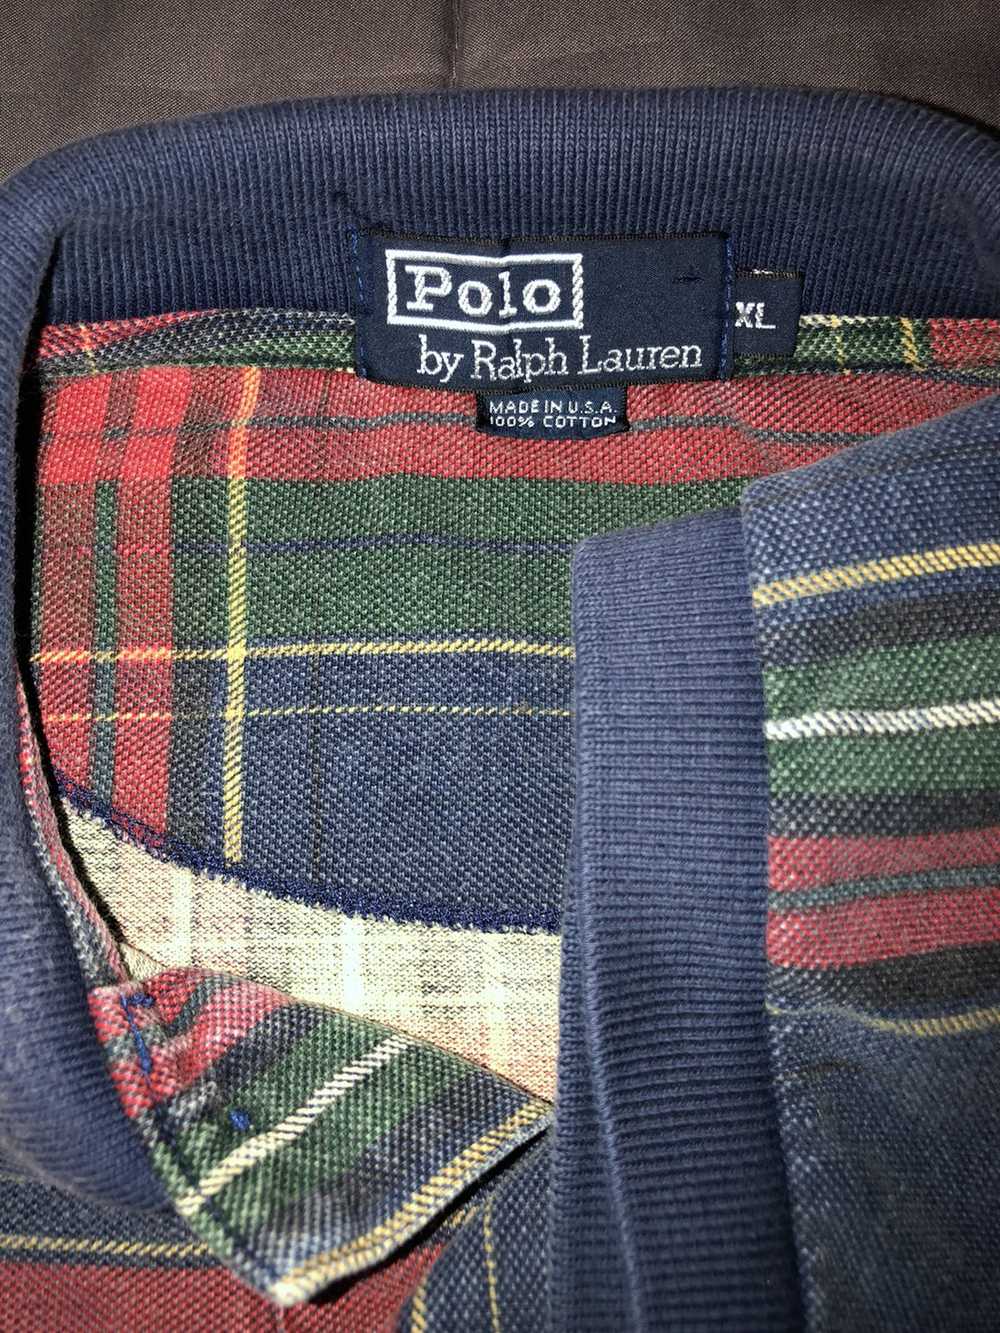 Polo Ralph Lauren Made in USA Polo Ralph Lauren - image 3